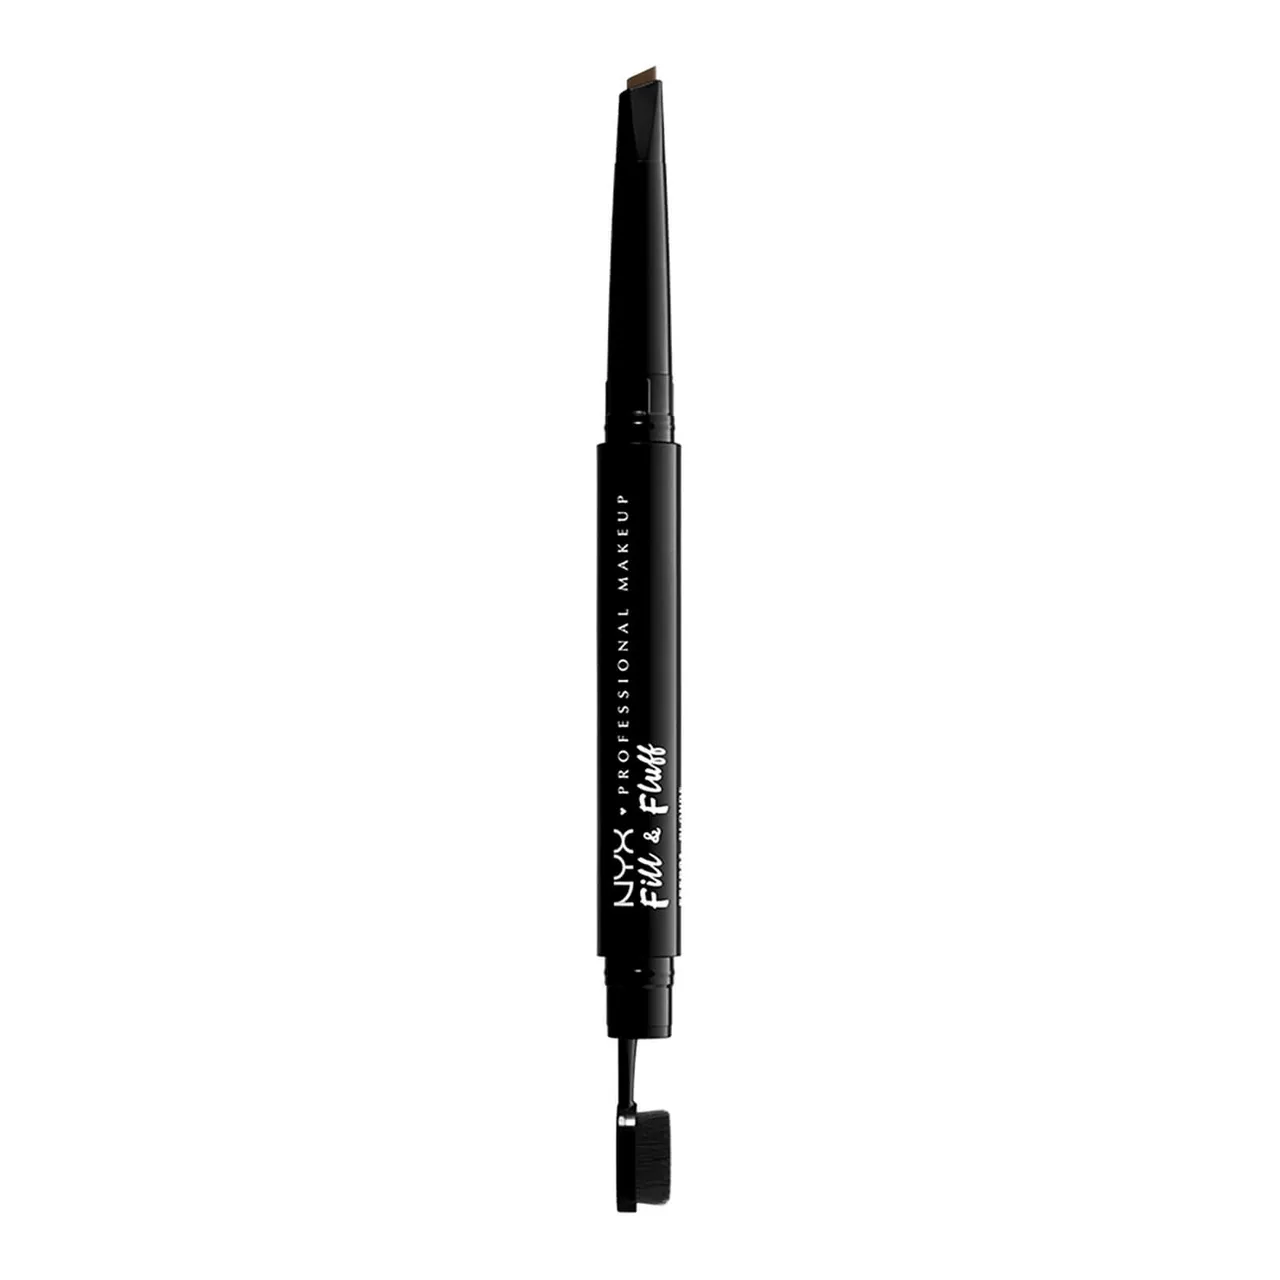 NYX Professional Makeup Fill and Fluff Eyebrow Pomade Pencil 0.2g (Various Shades) - Ash Brown